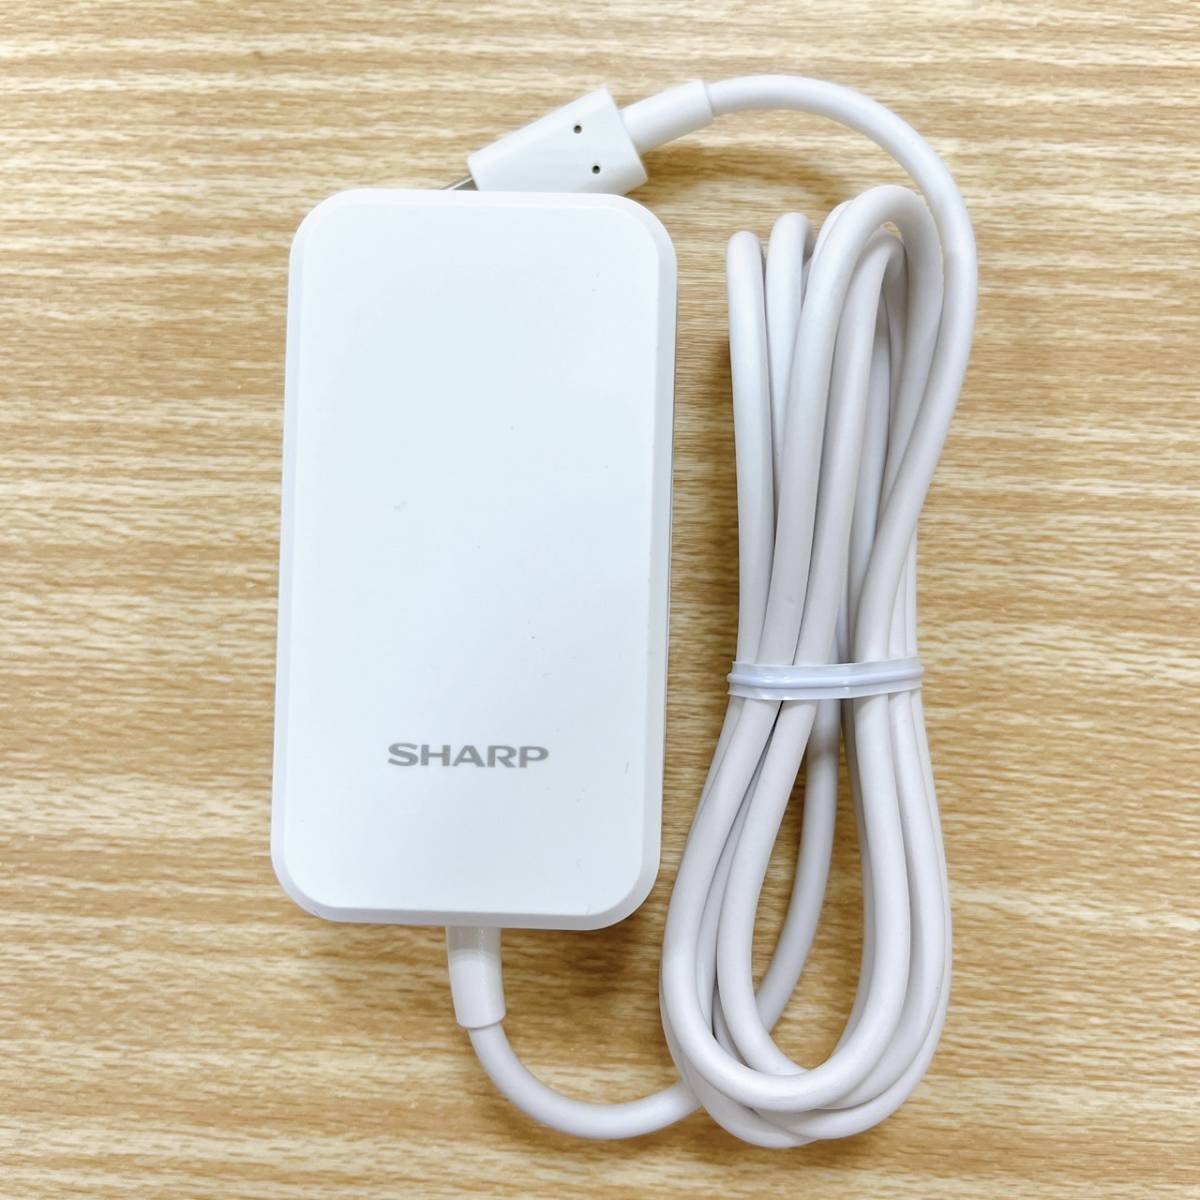  sharp SHARP AC adaptor SH-AC05 white white charger electrification verification settled [15801